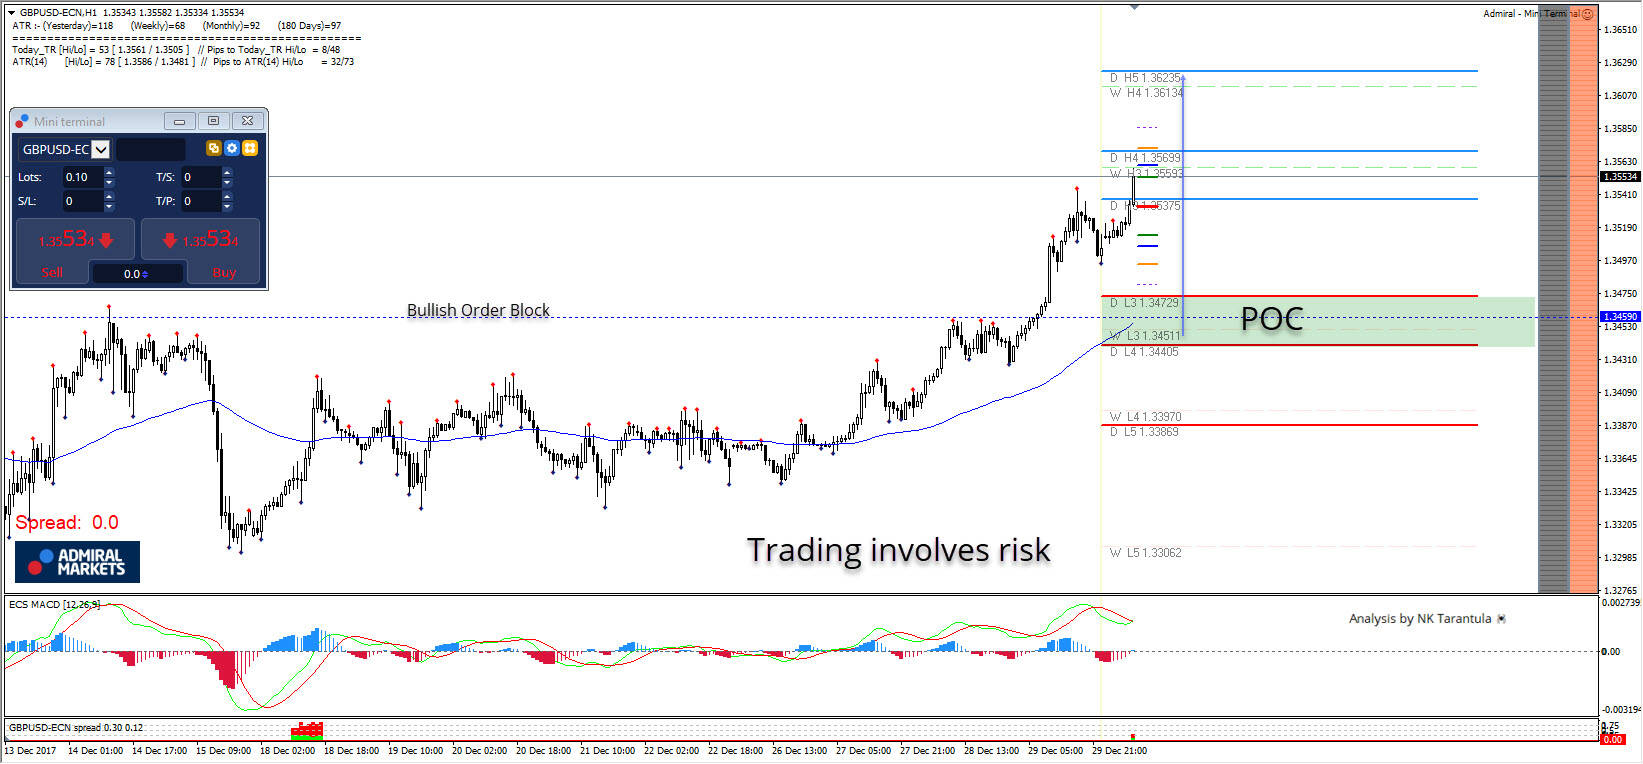 GBP/USD Strong Zig-Zag Bullish Pattern Points to the Upside